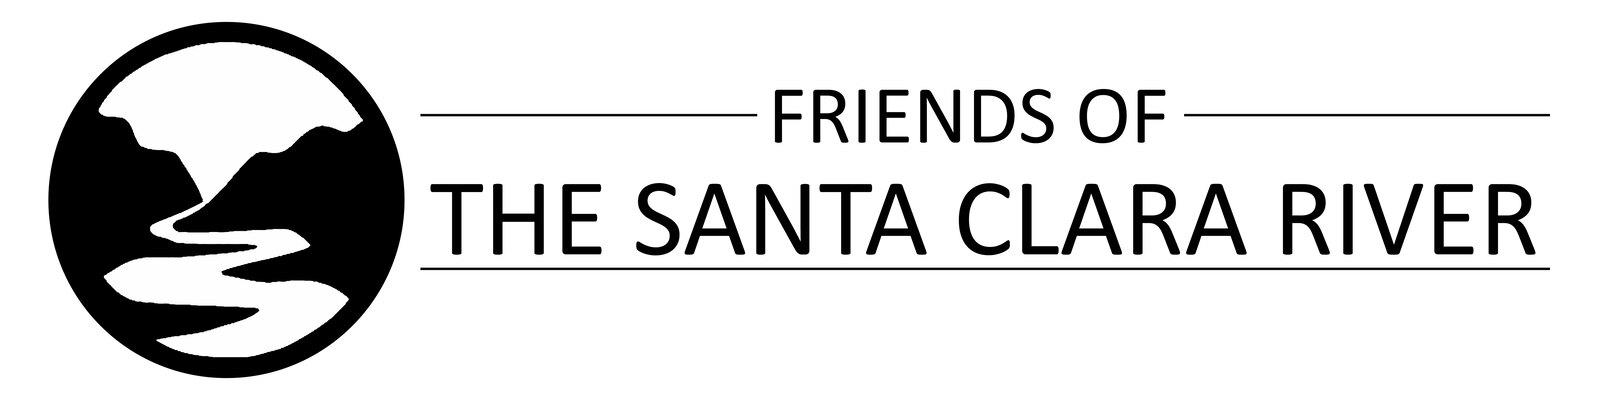 Friends of The Santa Clara River logo